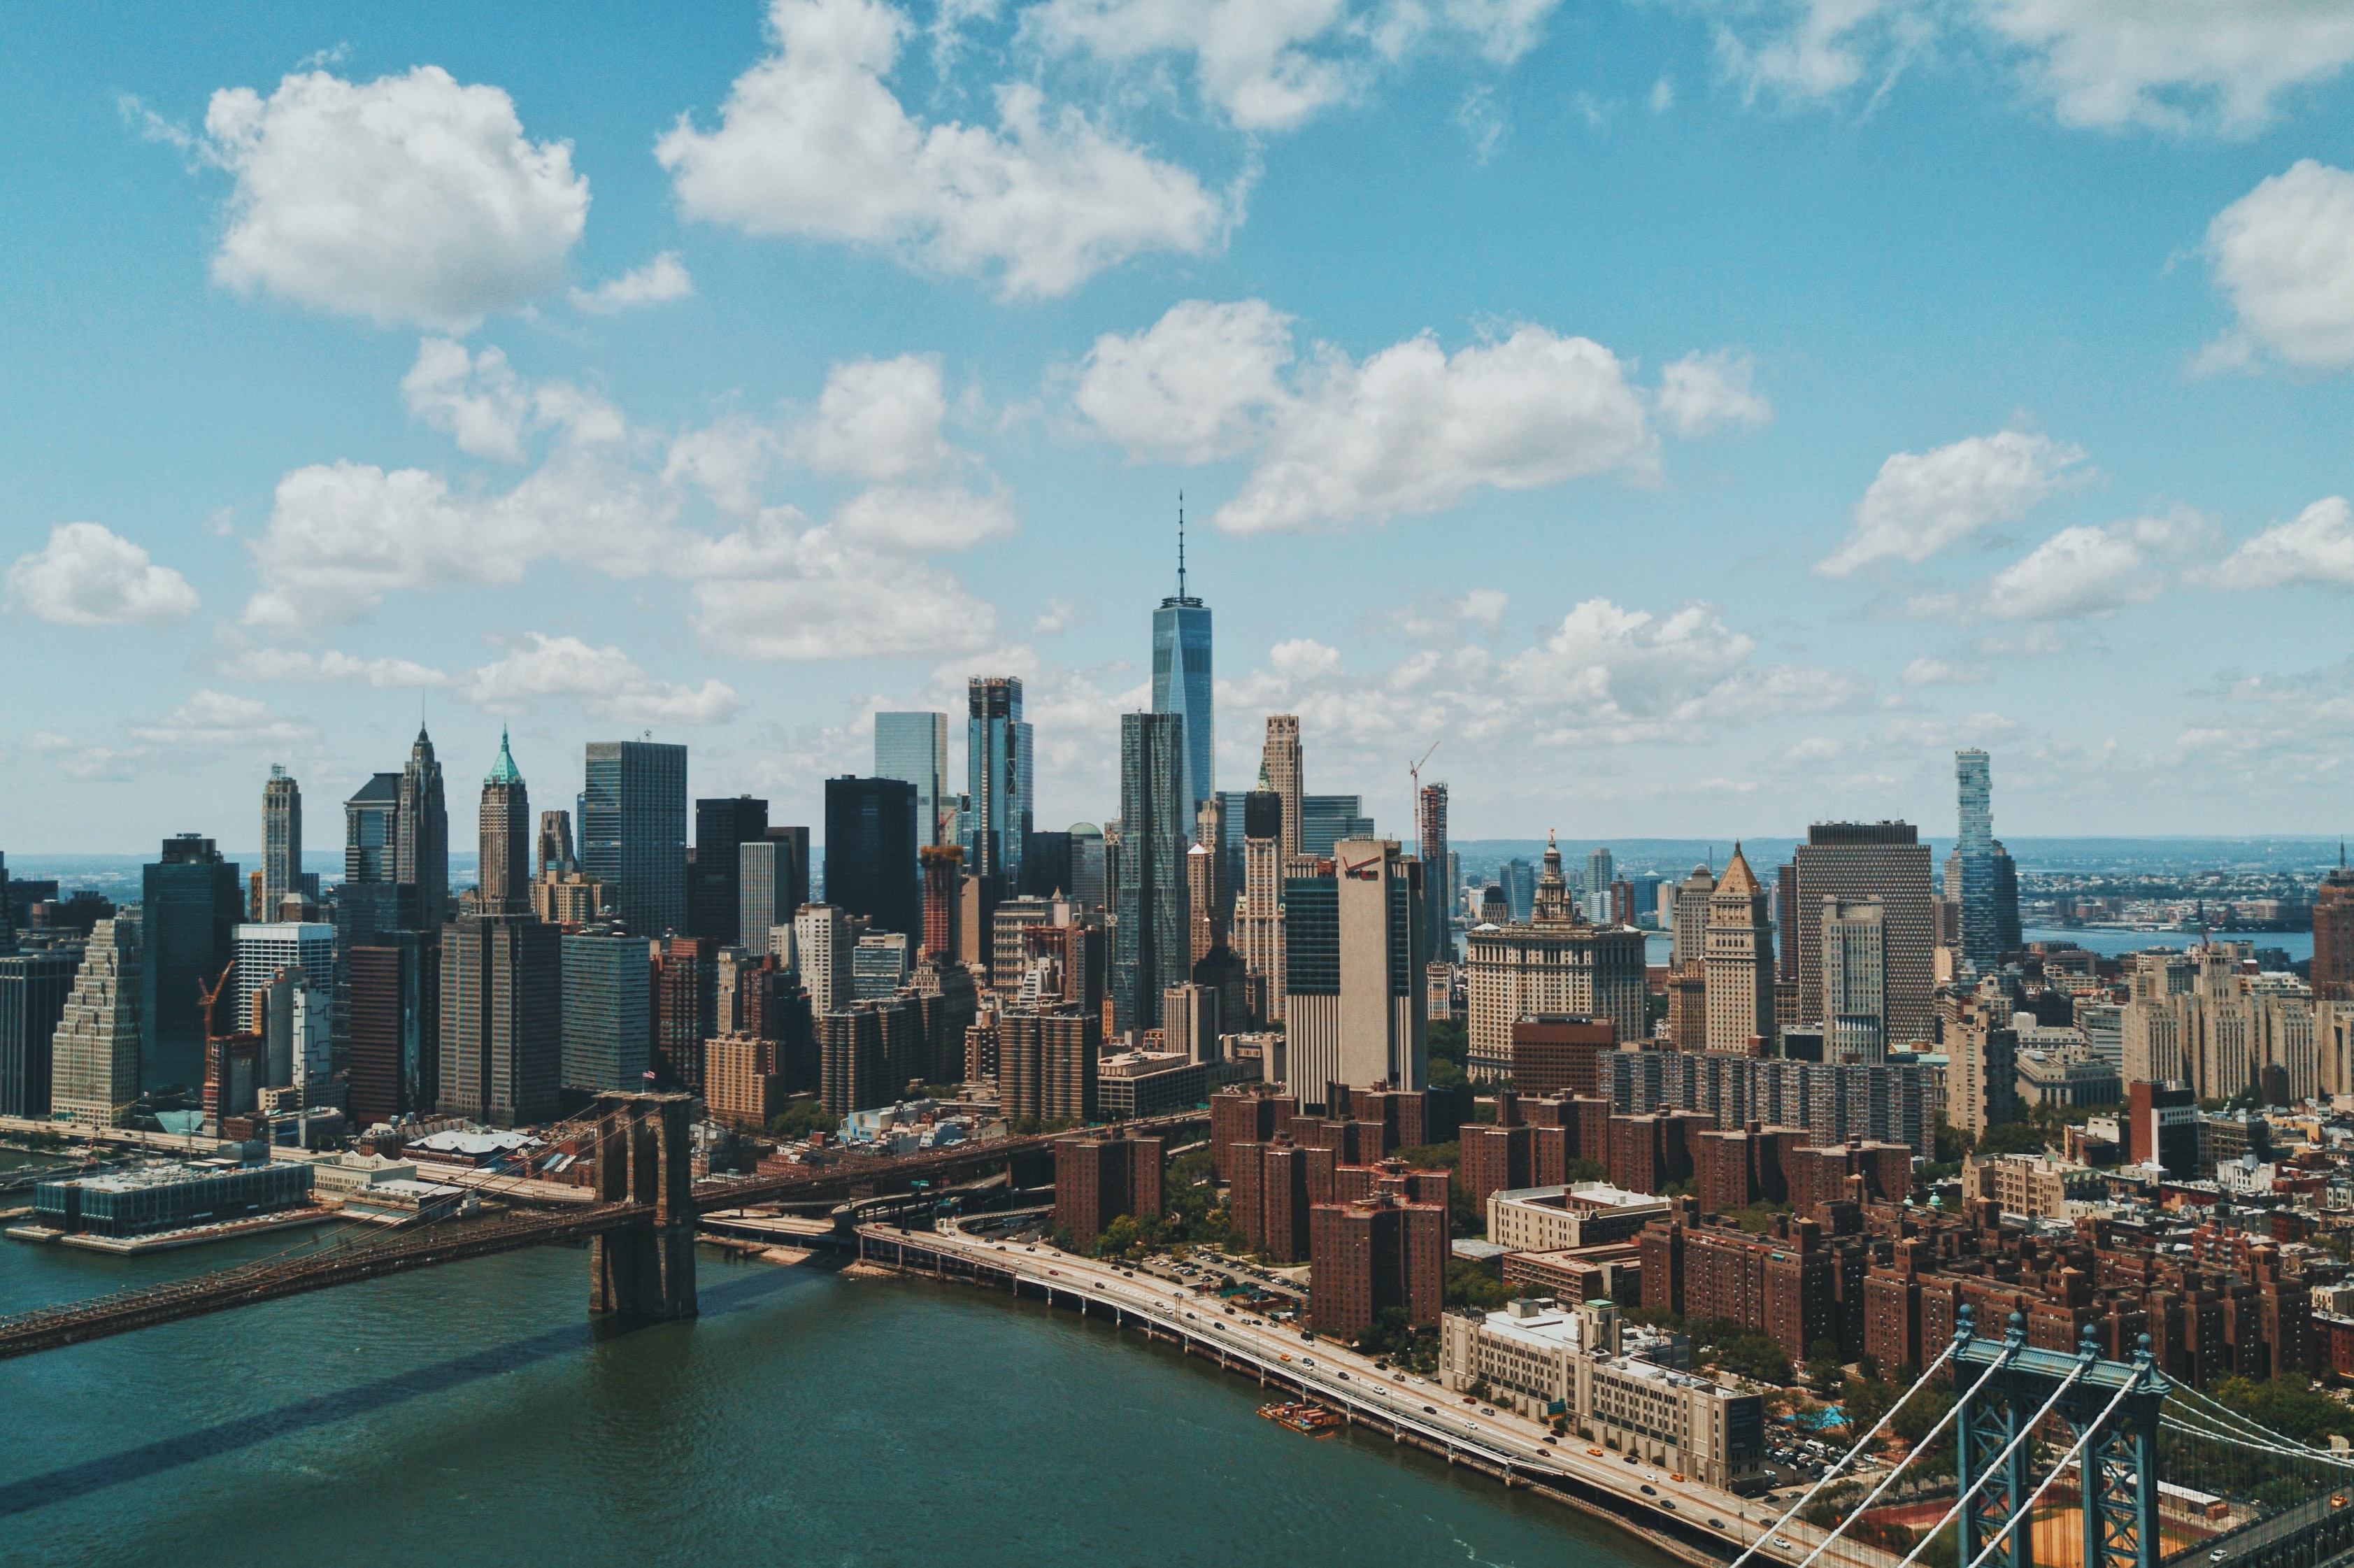 The Manhattan Bridge and the city’s skyscrapers